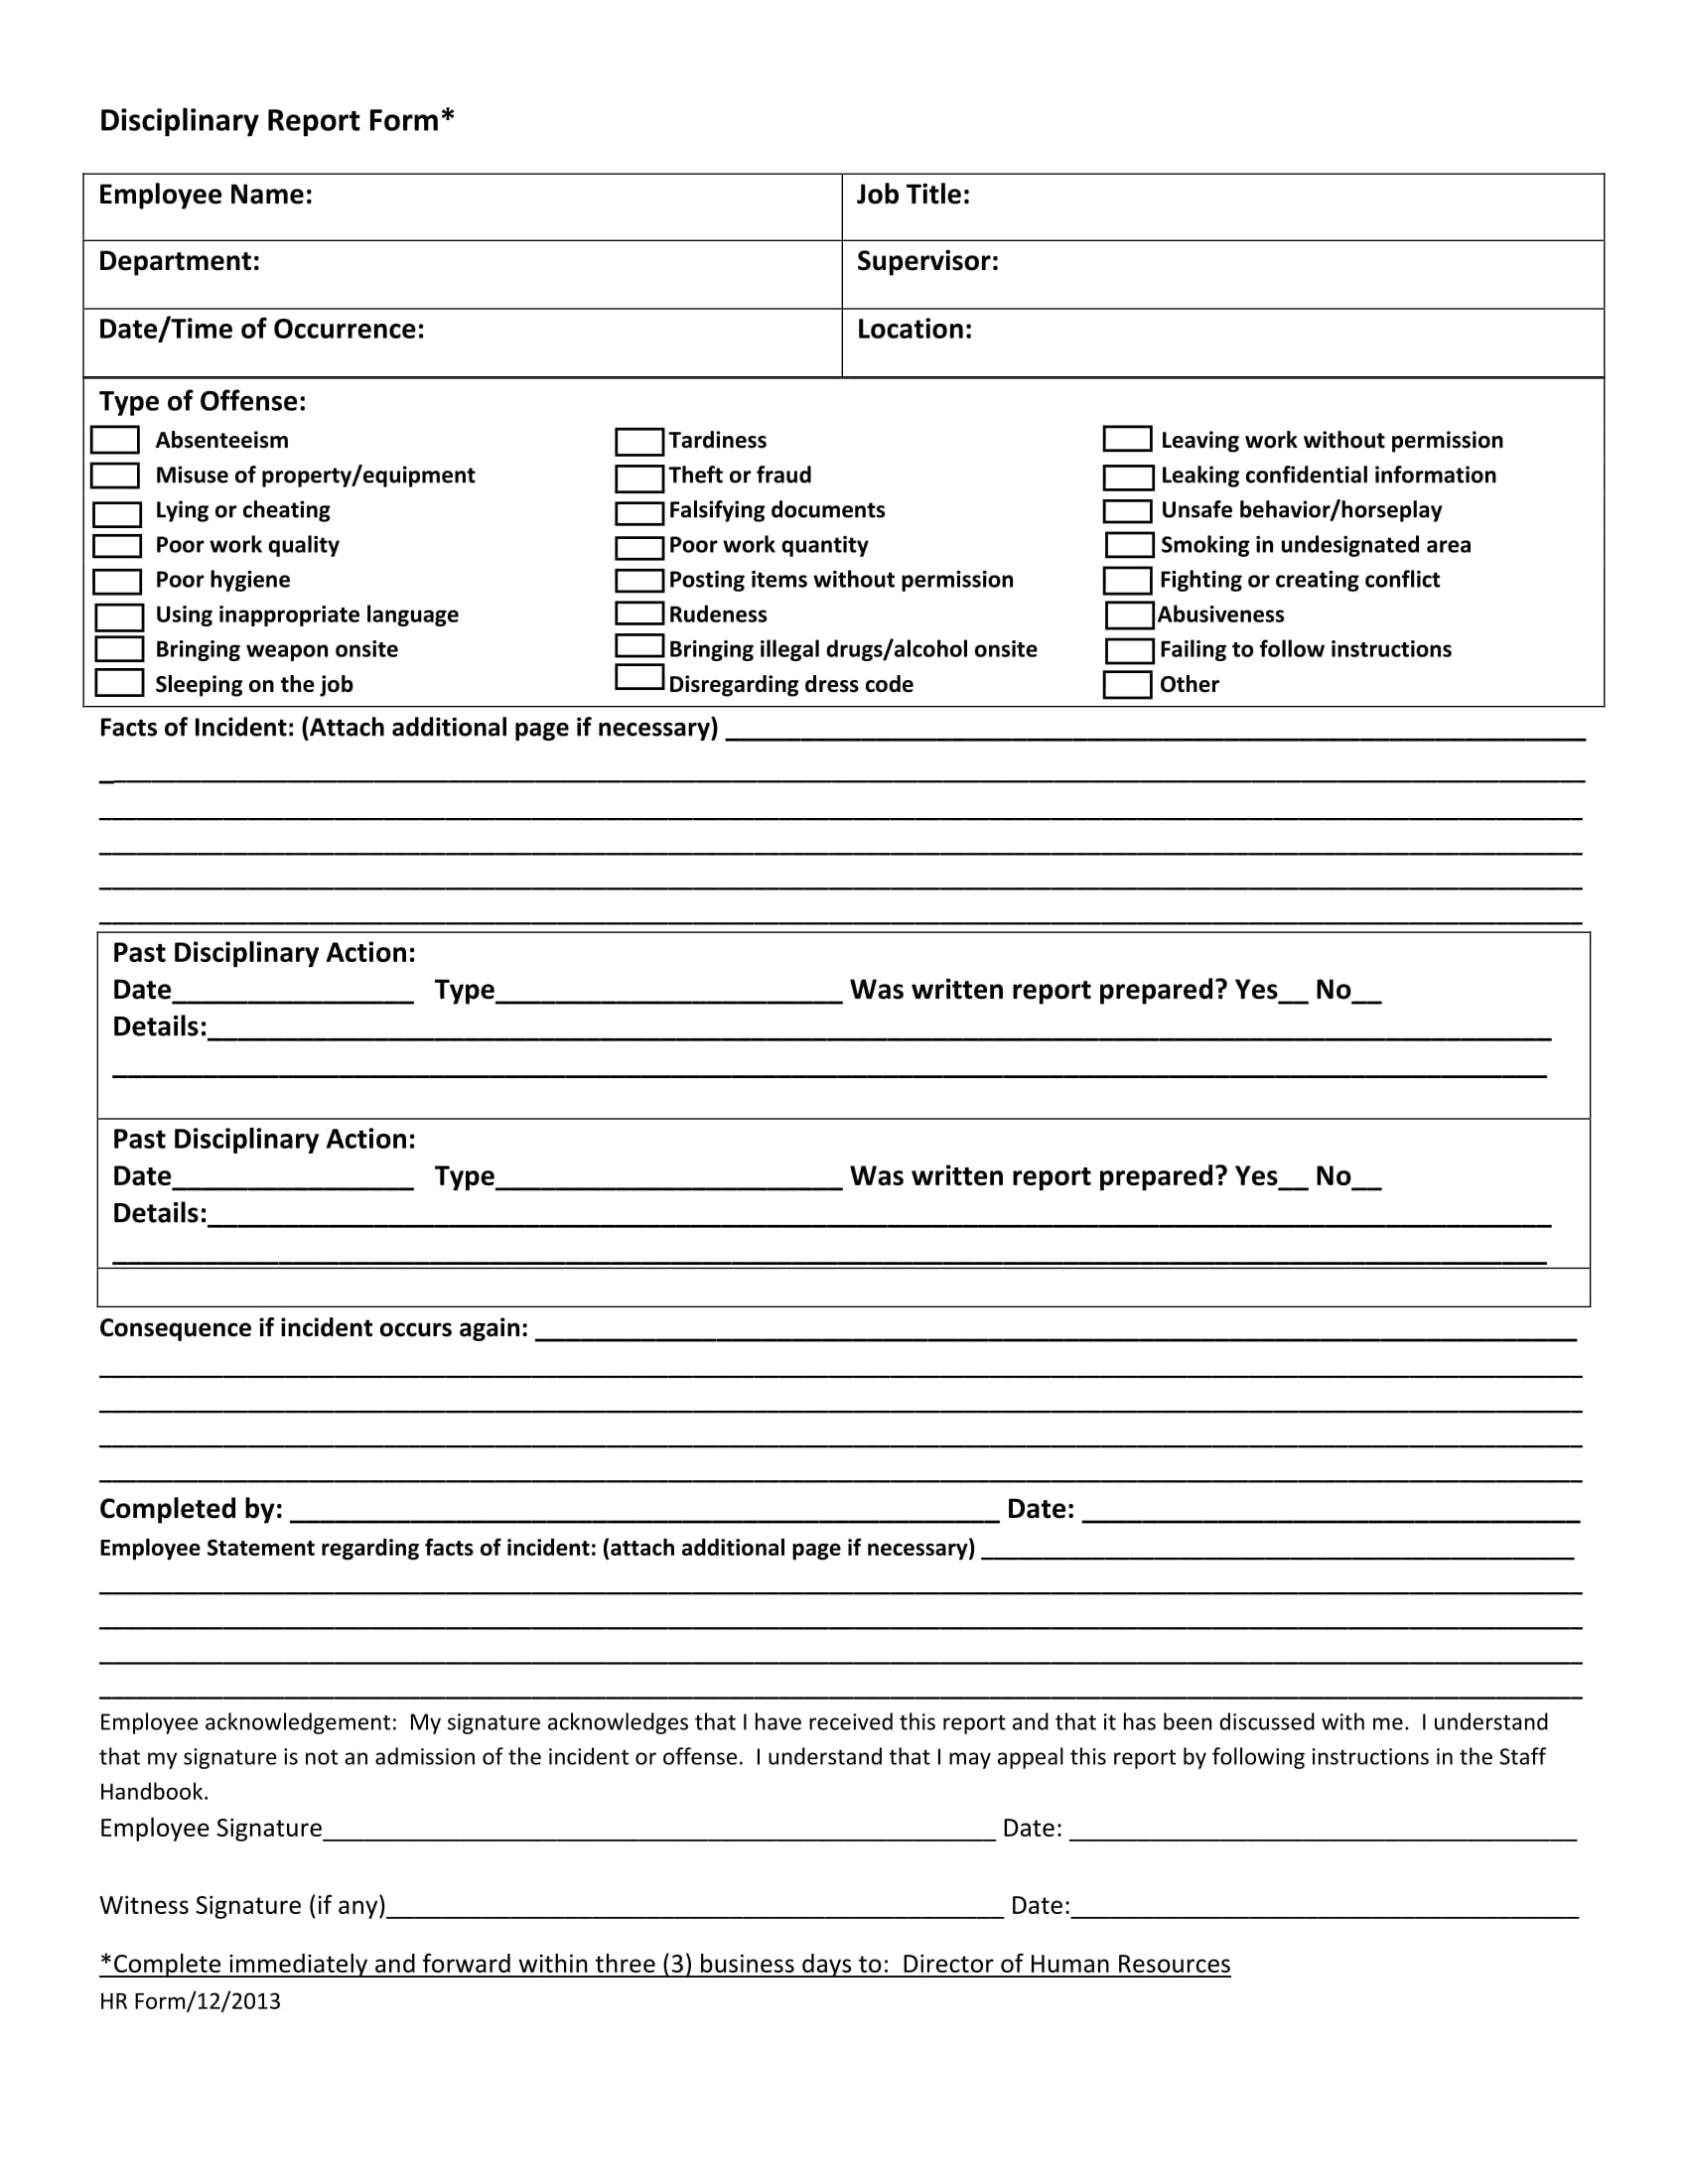 employee disciplinary report form 1